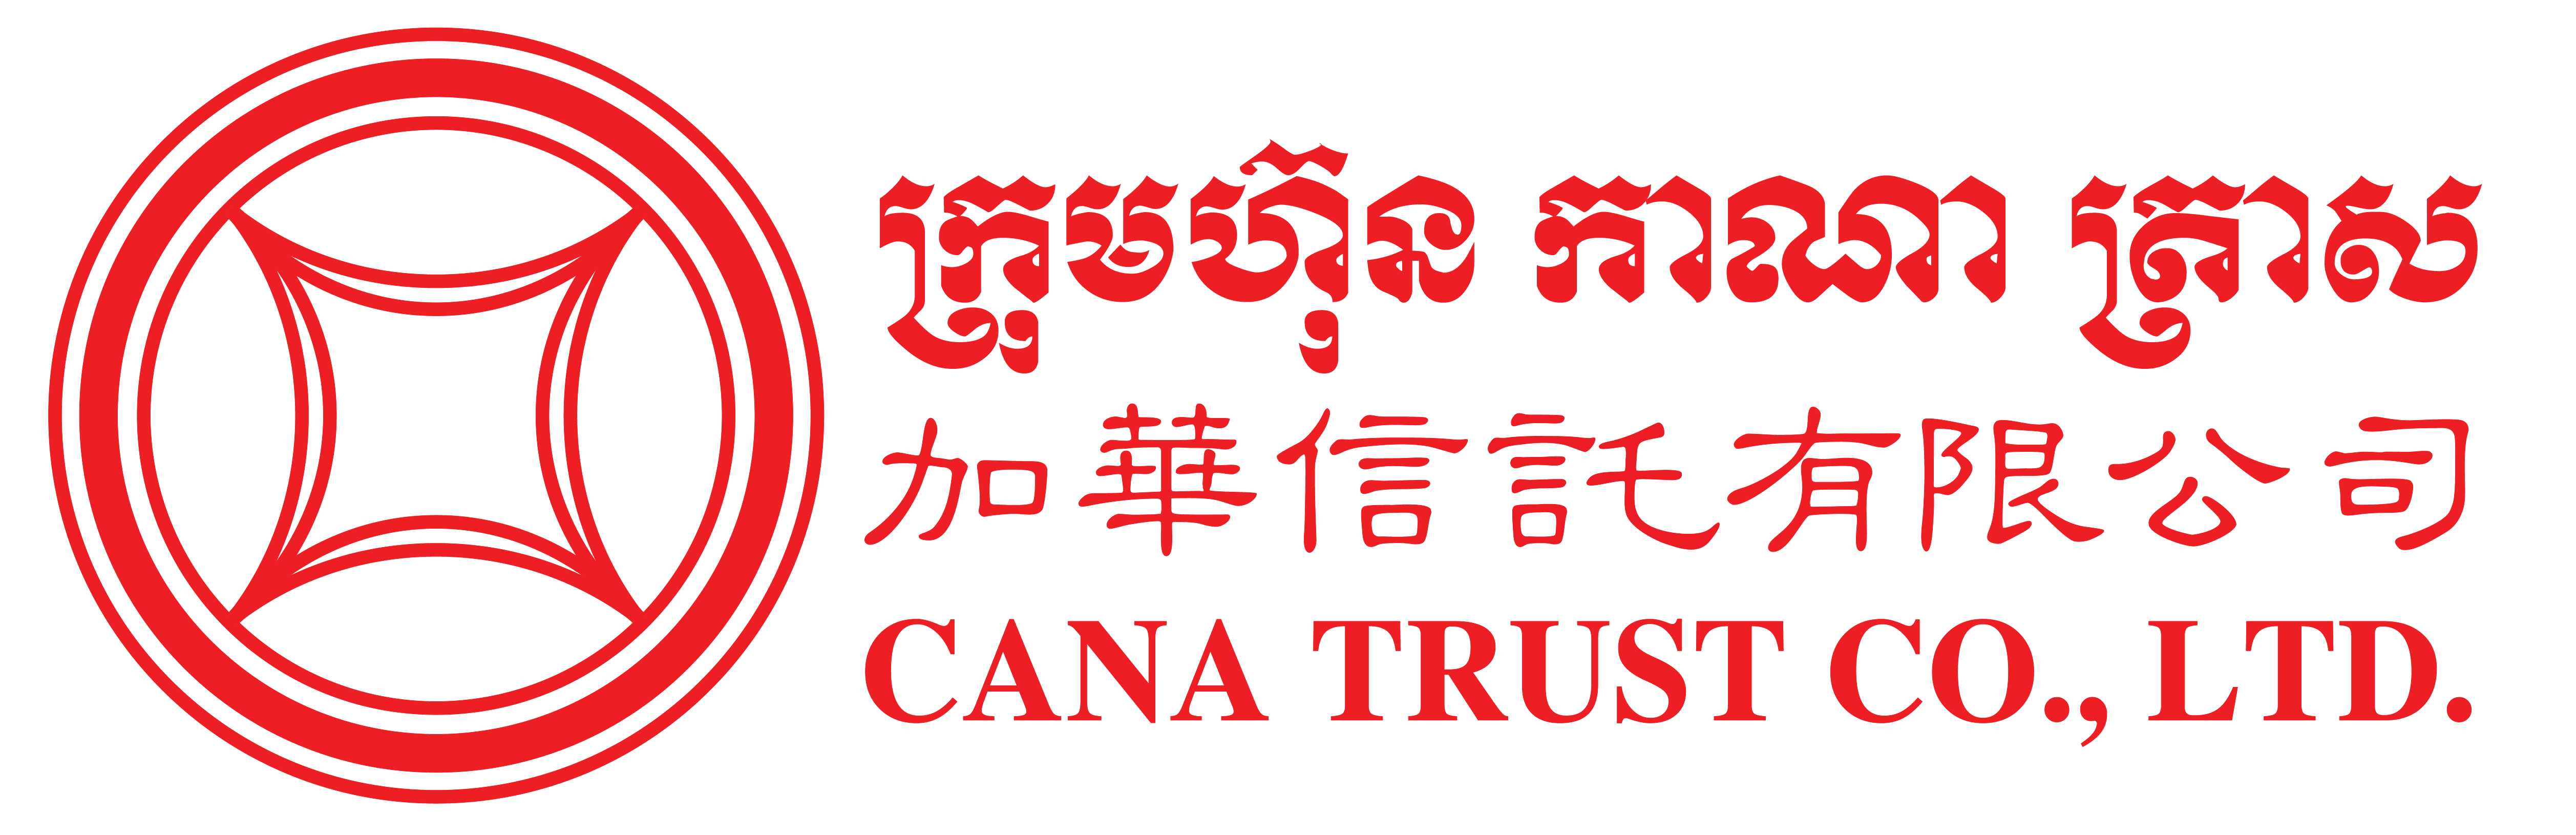 CANA TRUST Co., Ltd